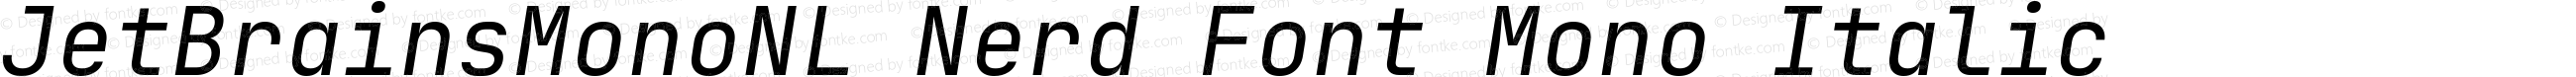 JetBrainsMonoNL Nerd Font Mono Italic